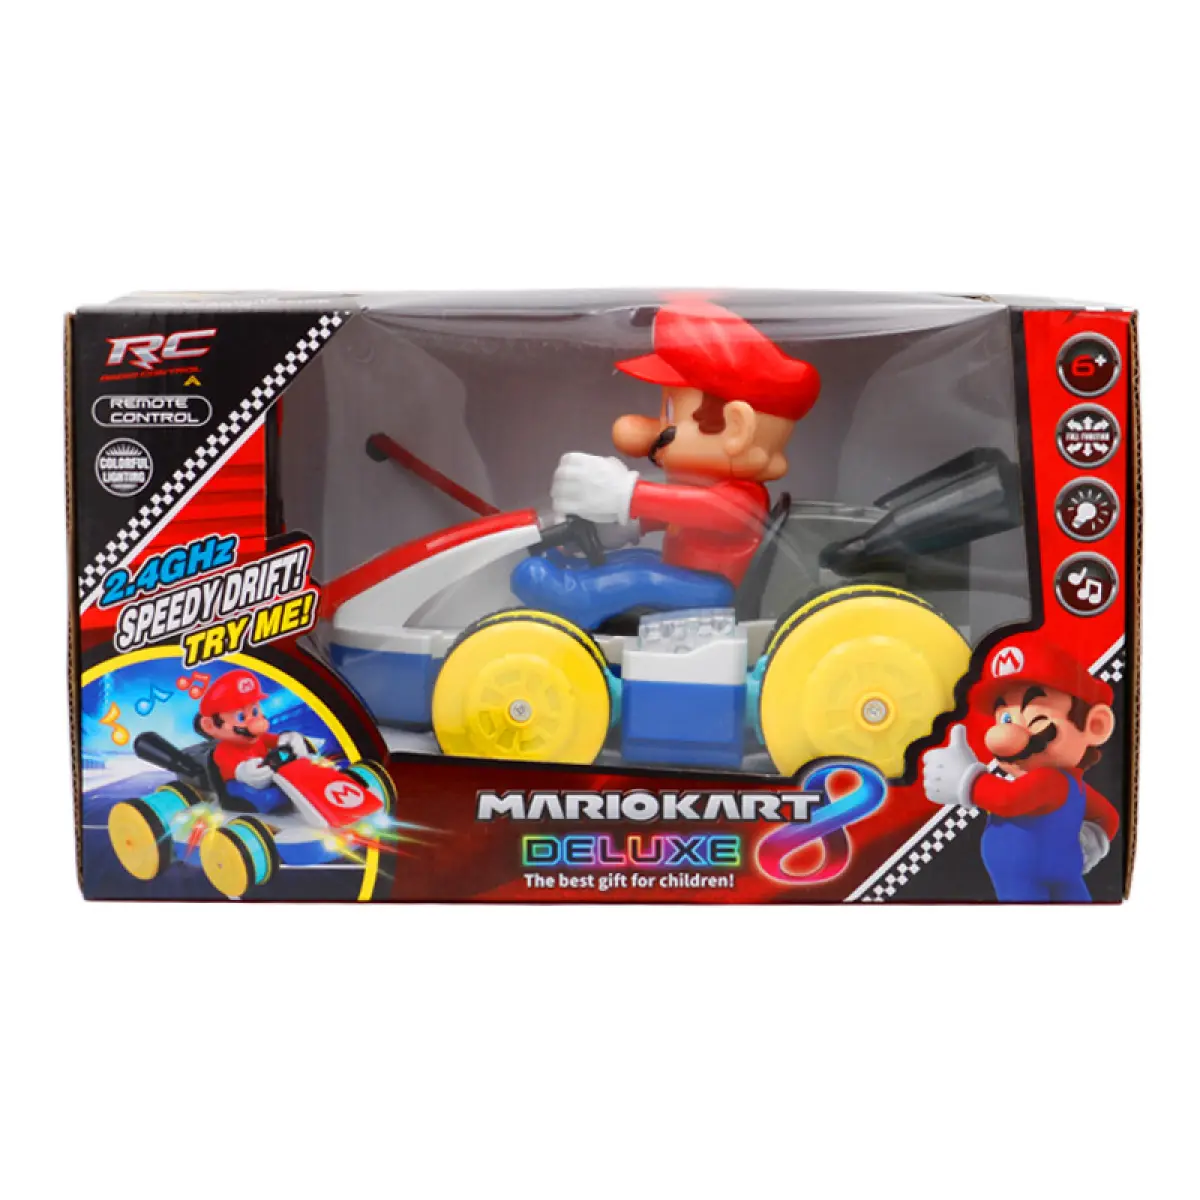 Nintendo Super Mario Kart 8 Mario Anti-Gravity Mini RC Racer 2.4Ghz with Lights